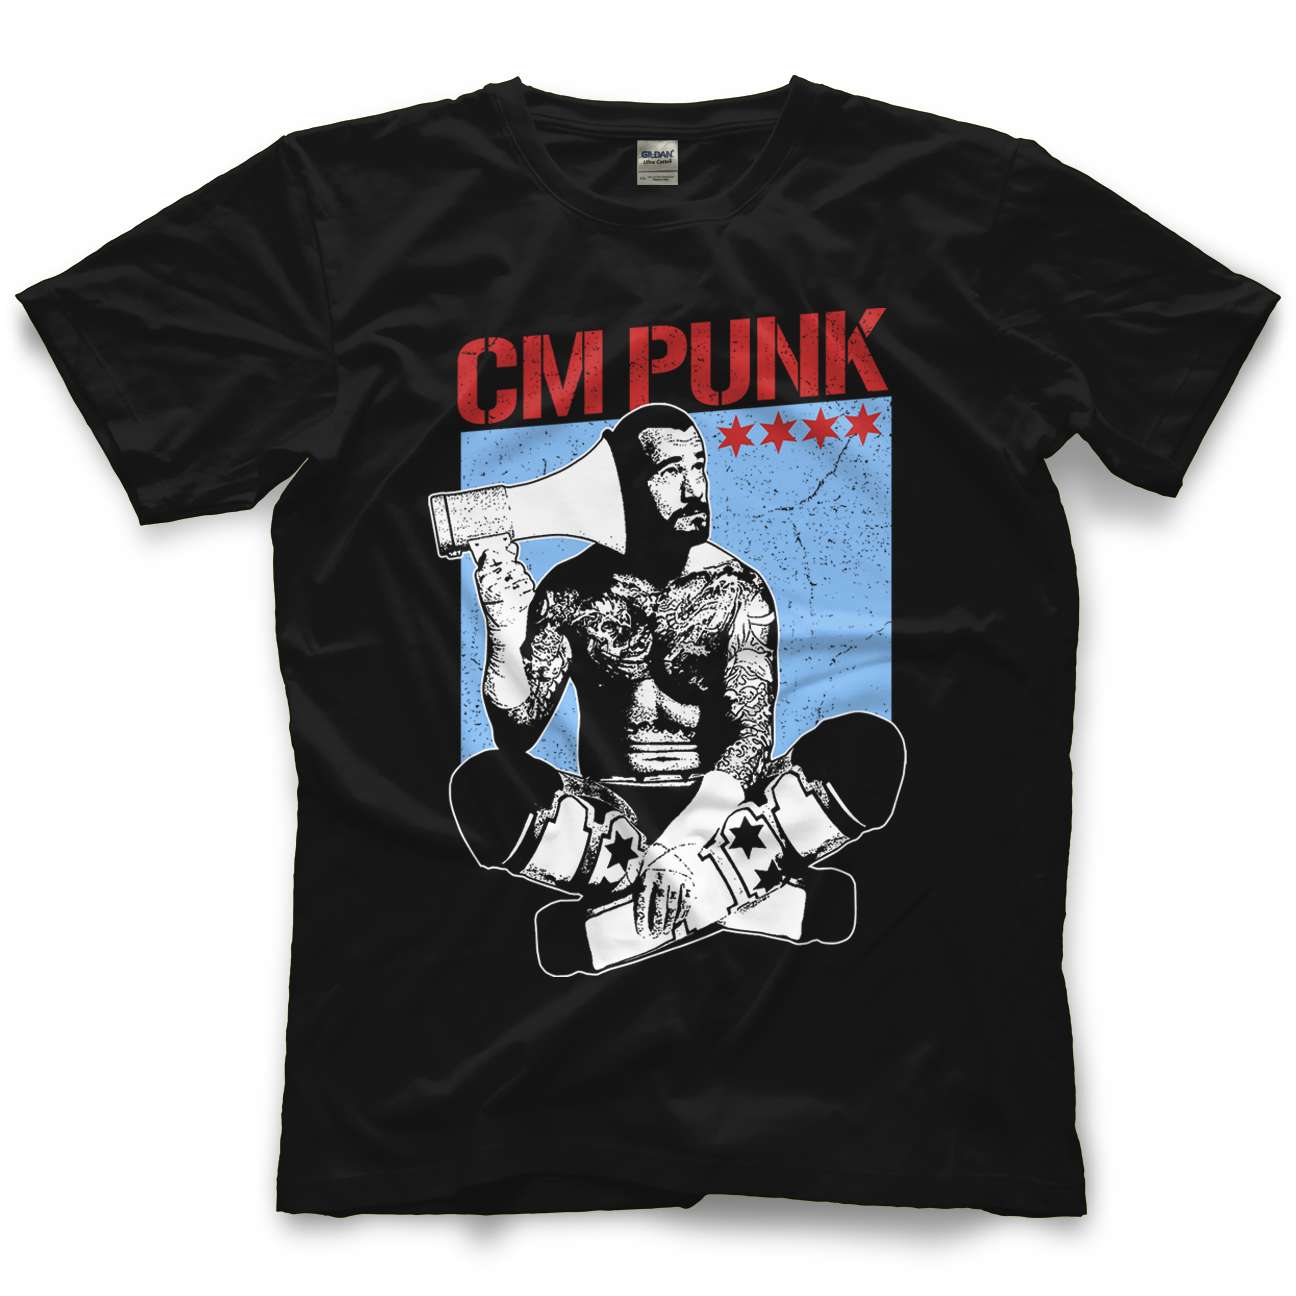 CM Punk - Professional wrestler, The Straight Edge Society